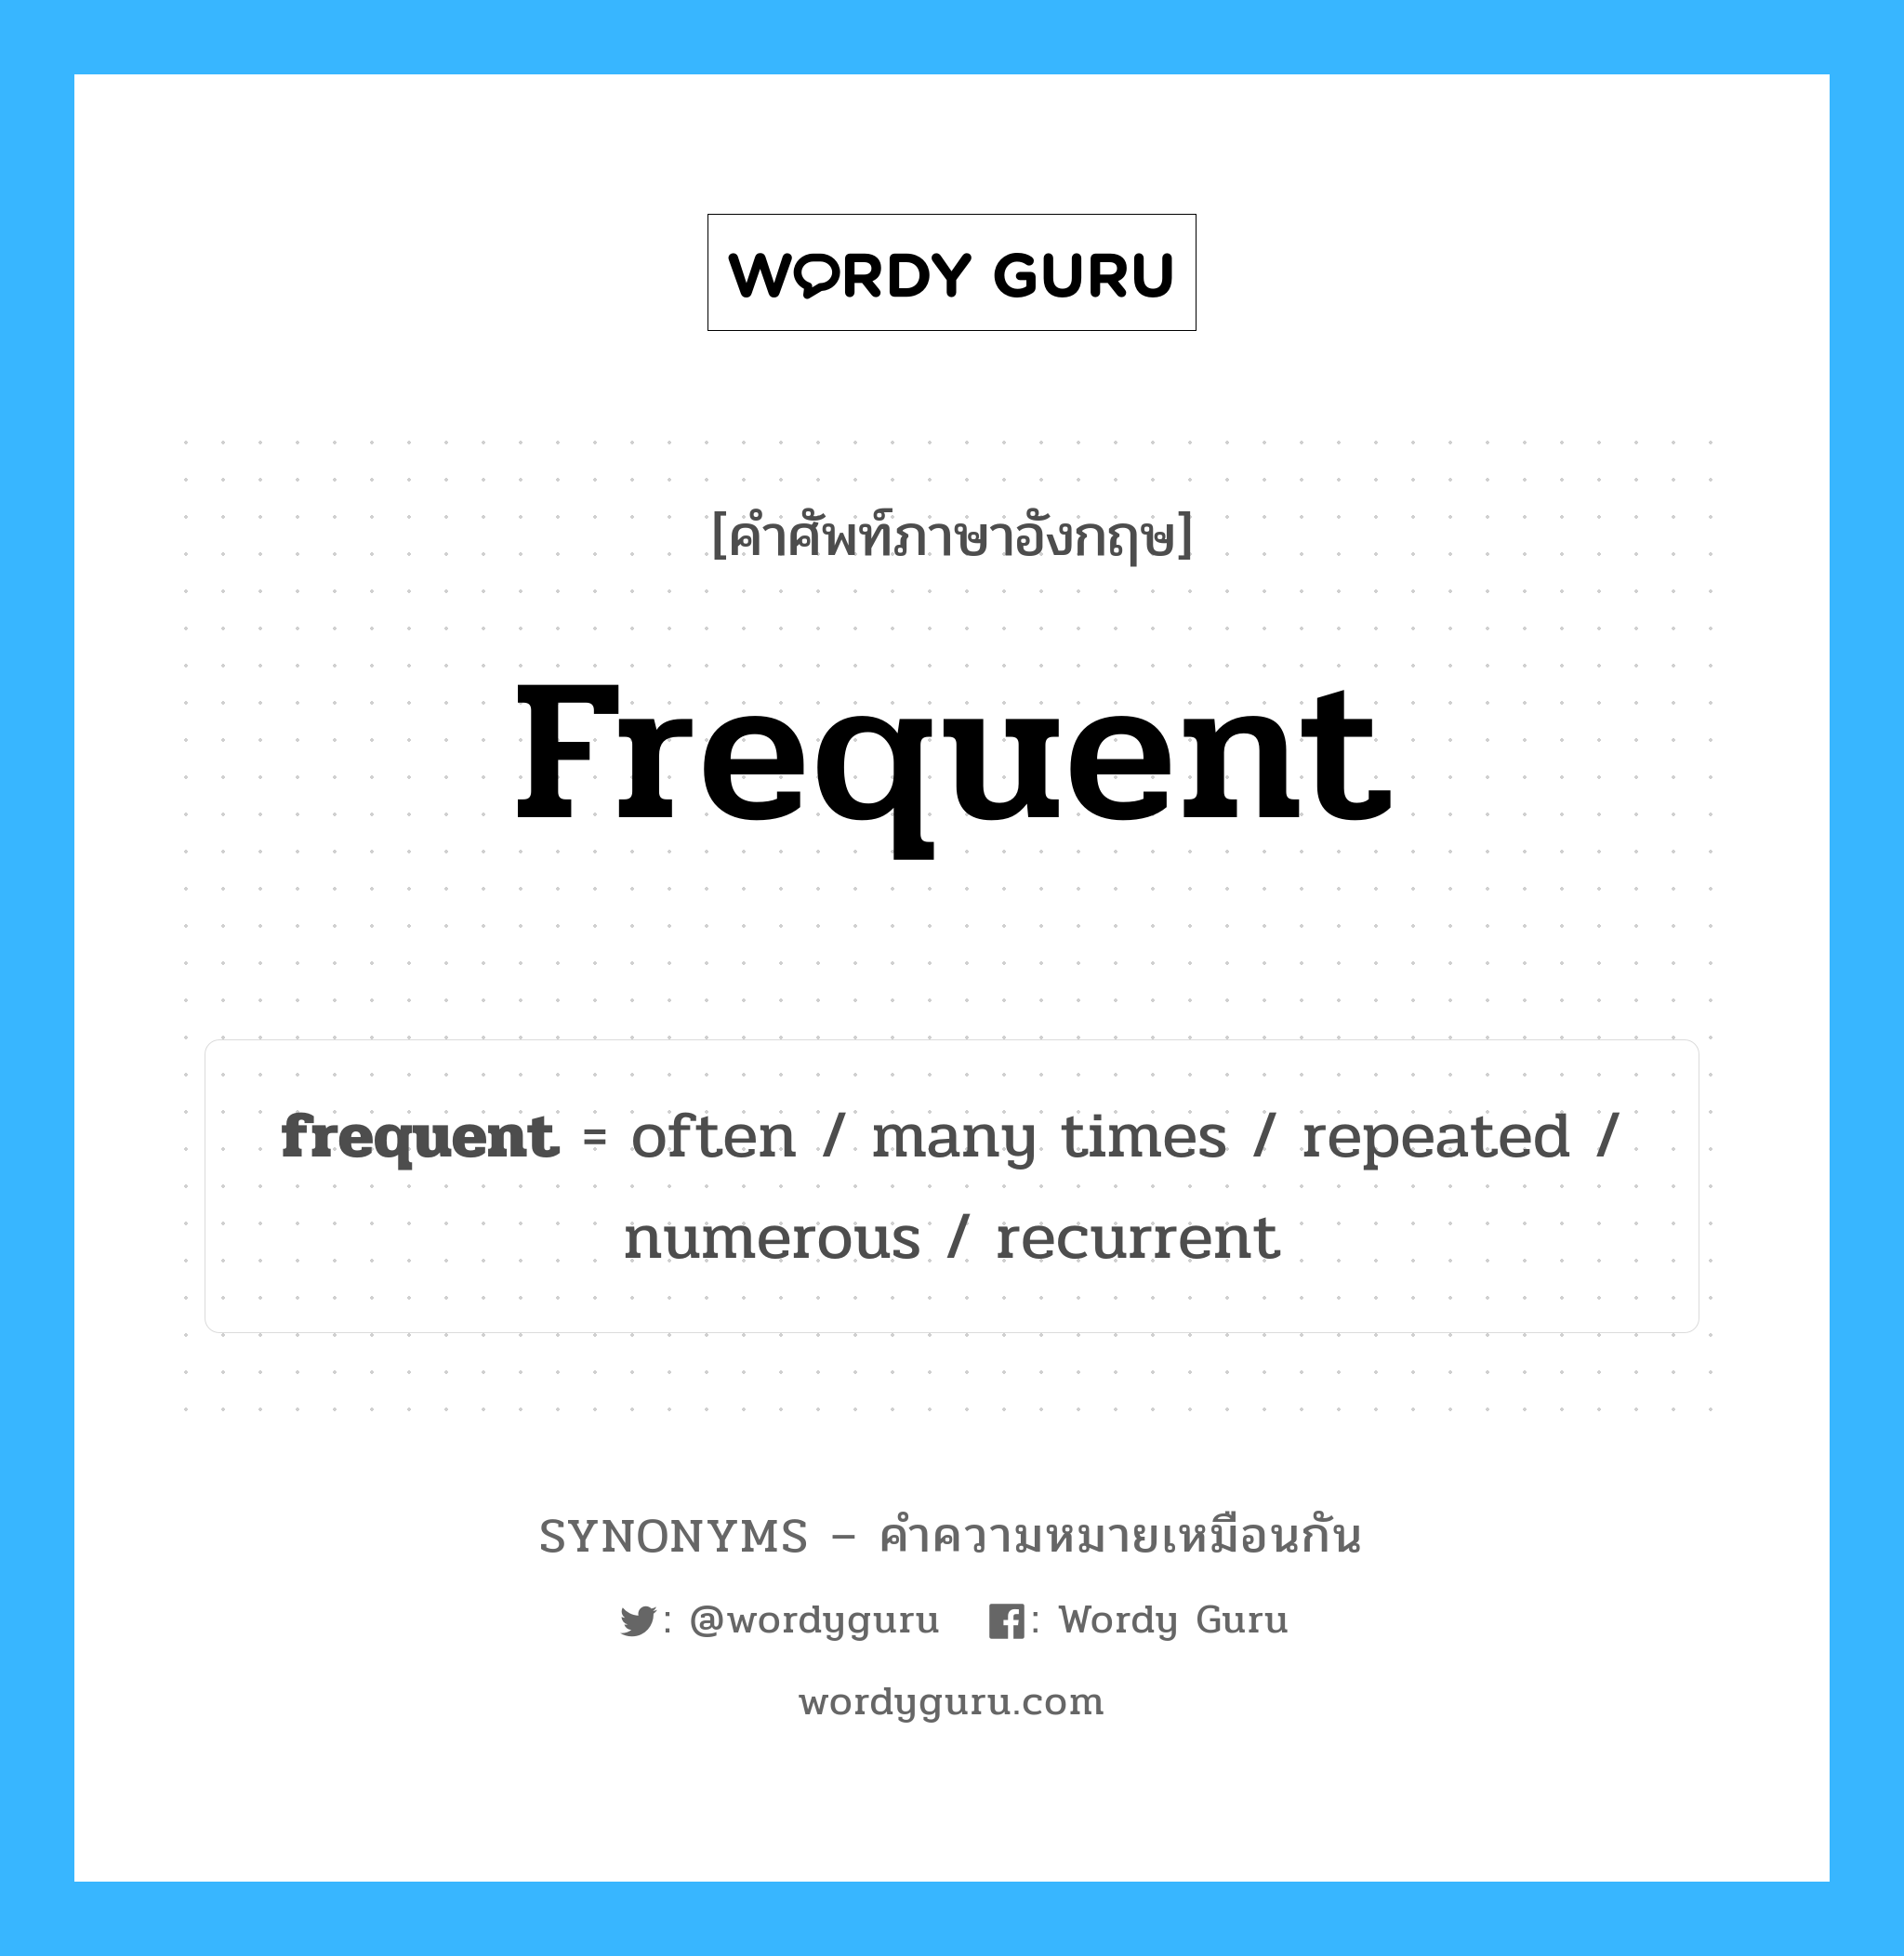 many times เป็นหนึ่งใน frequent และมีคำอื่น ๆ อีกดังนี้, คำศัพท์ภาษาอังกฤษ many times ความหมายคล้ายกันกับ frequent แปลว่า หลายครั้ง หมวด frequent